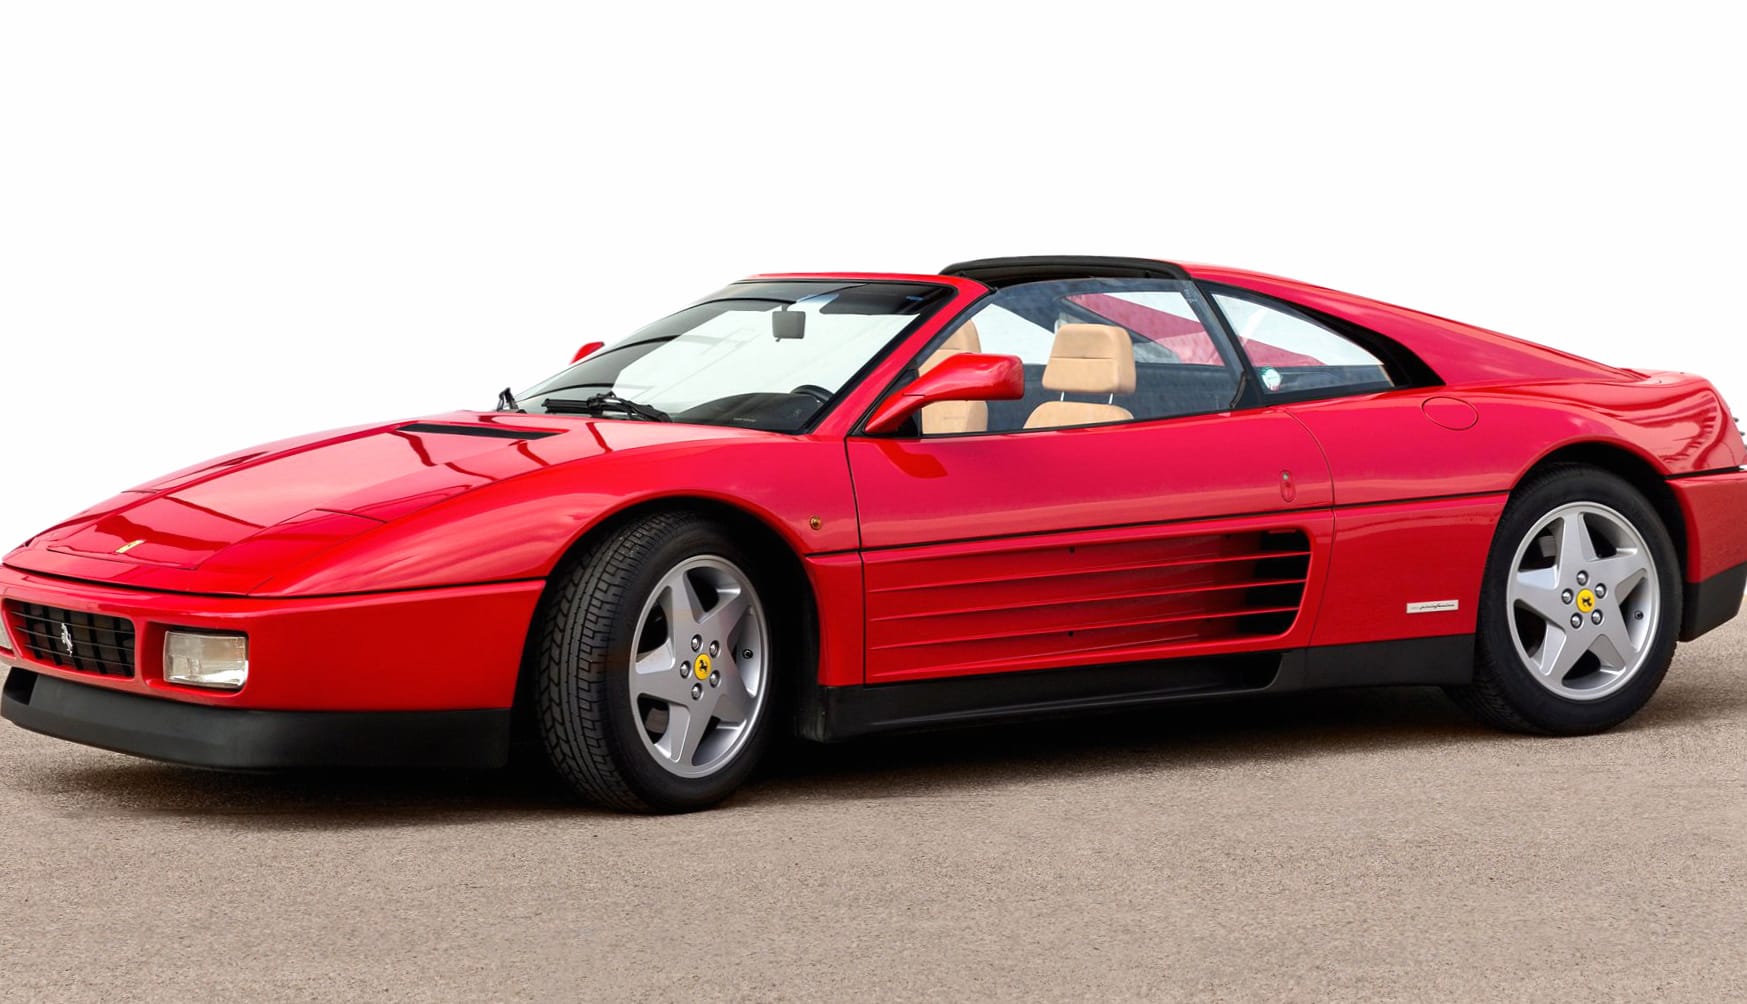 Ferrari 348 TS at 1024 x 768 size wallpapers HD quality